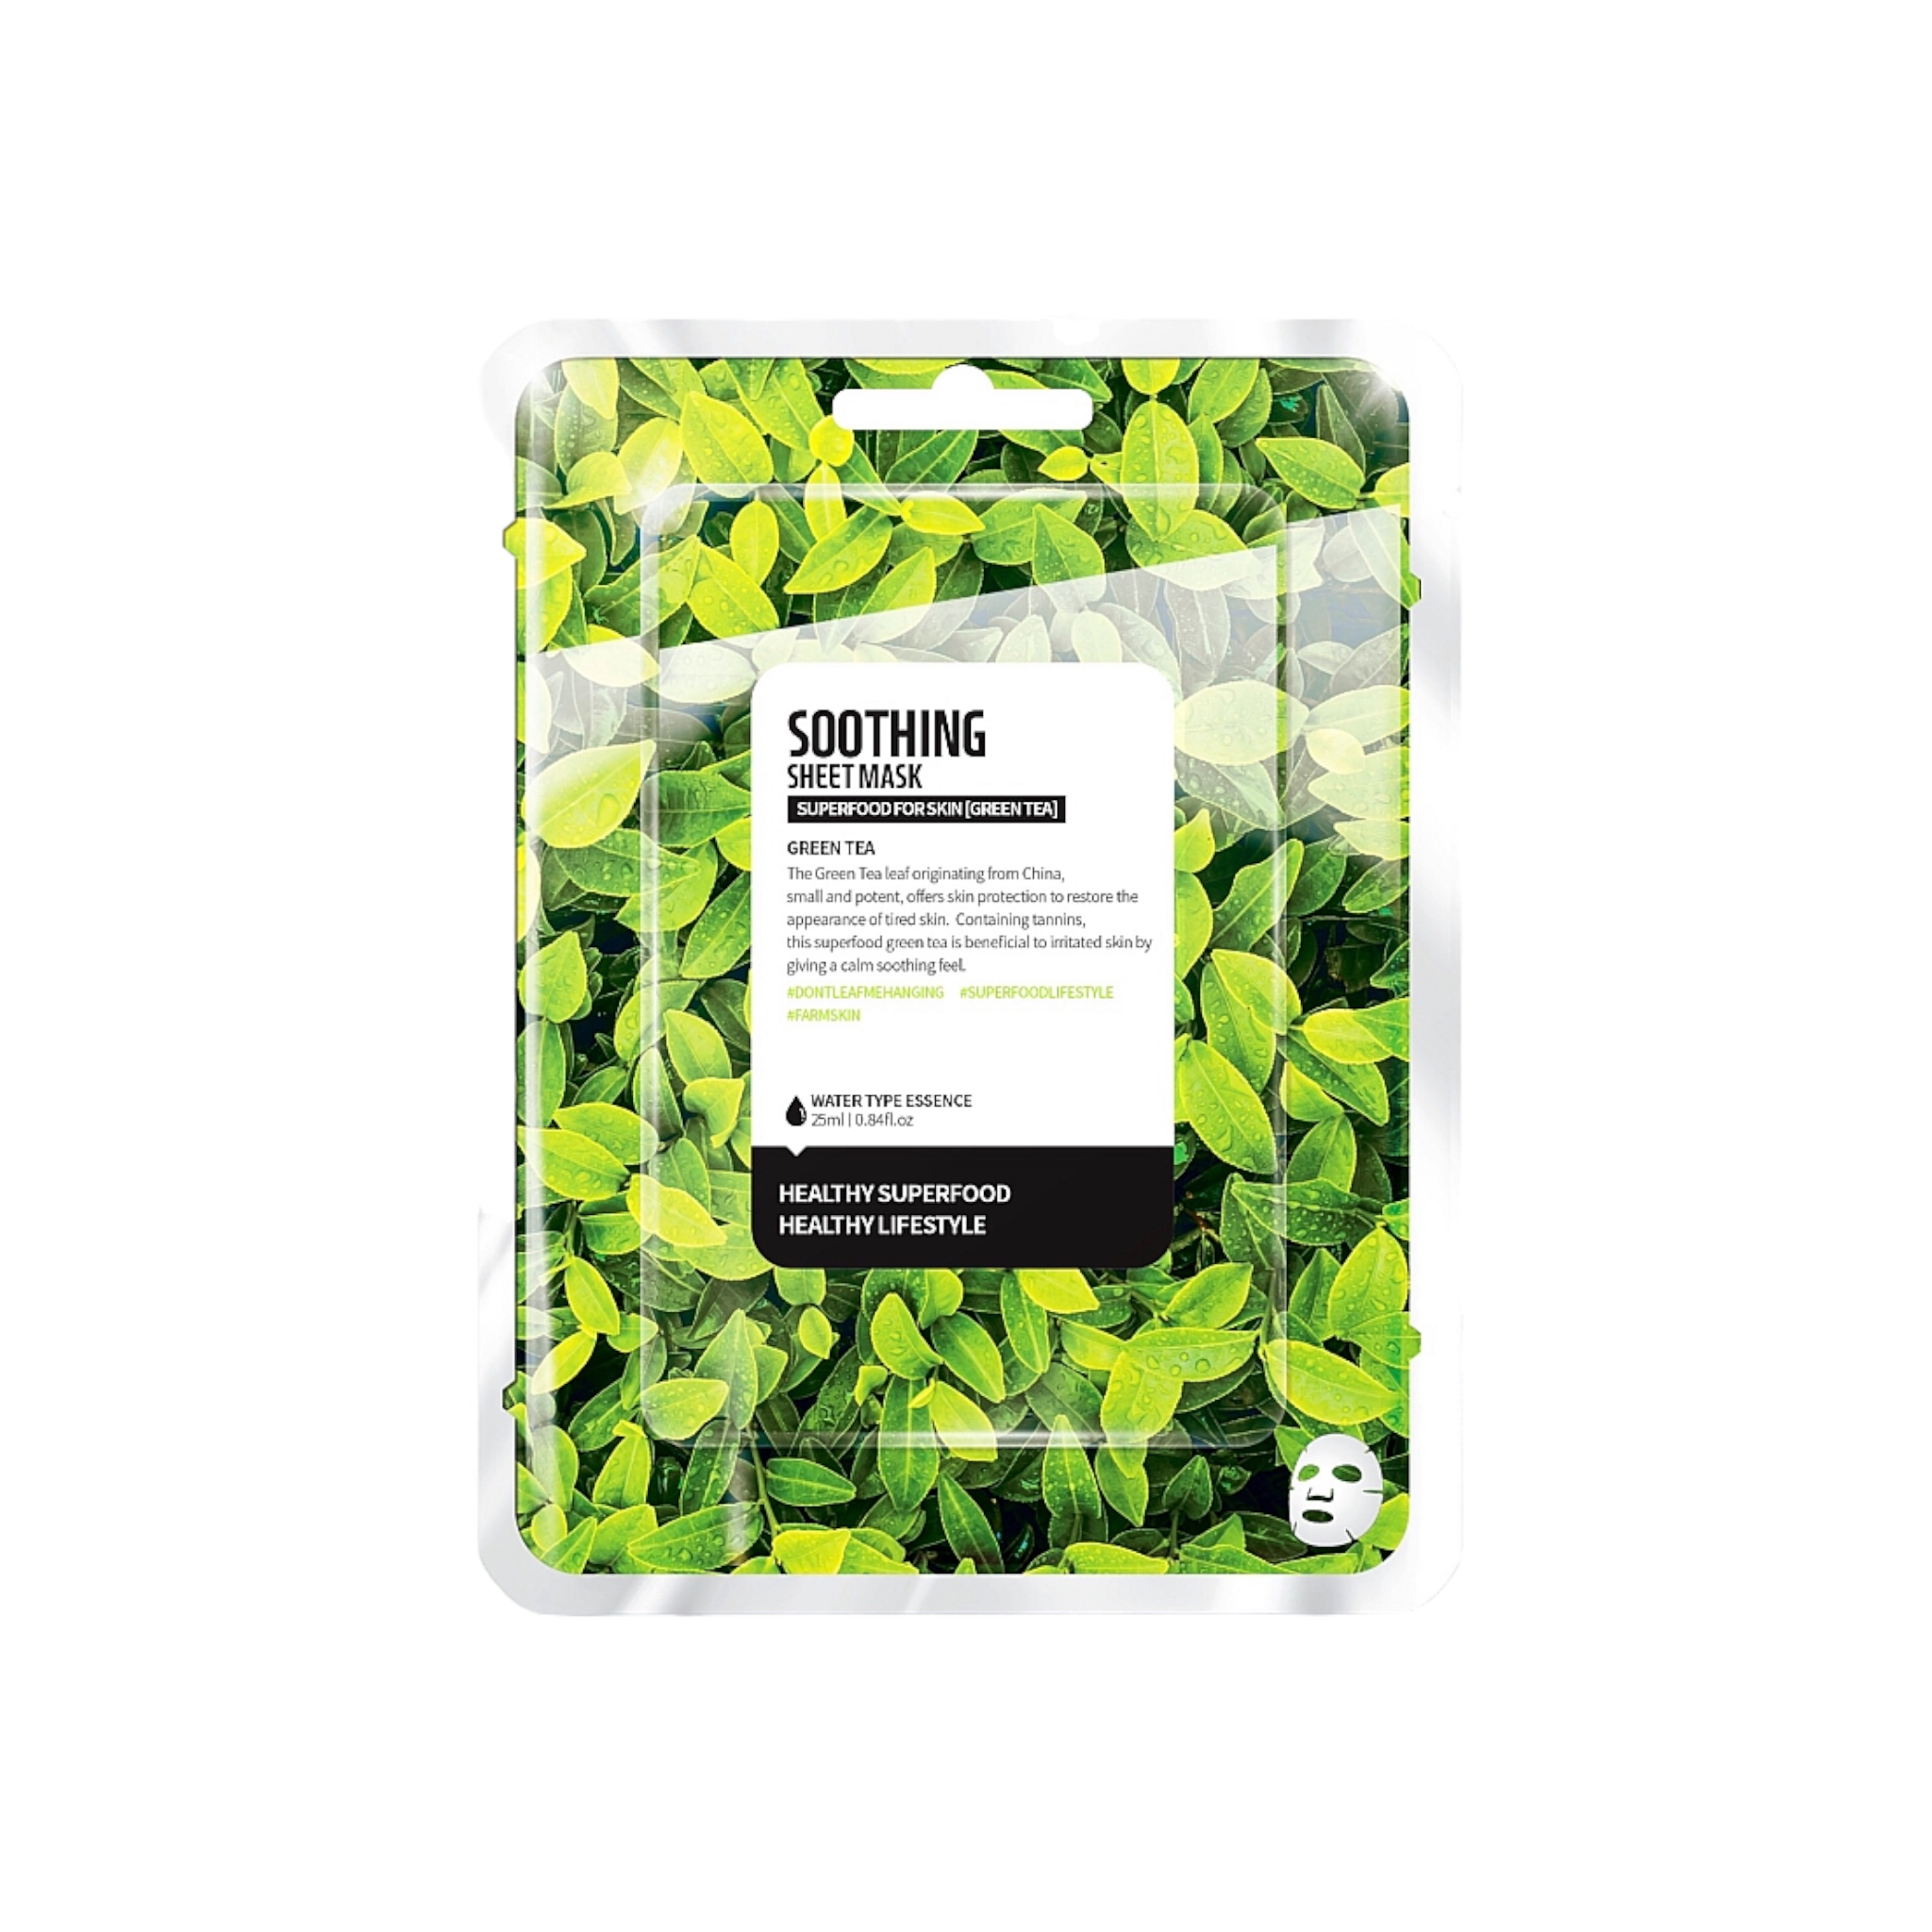 Farmskin Superfood Green Tea Soothing Sheet Face Mask